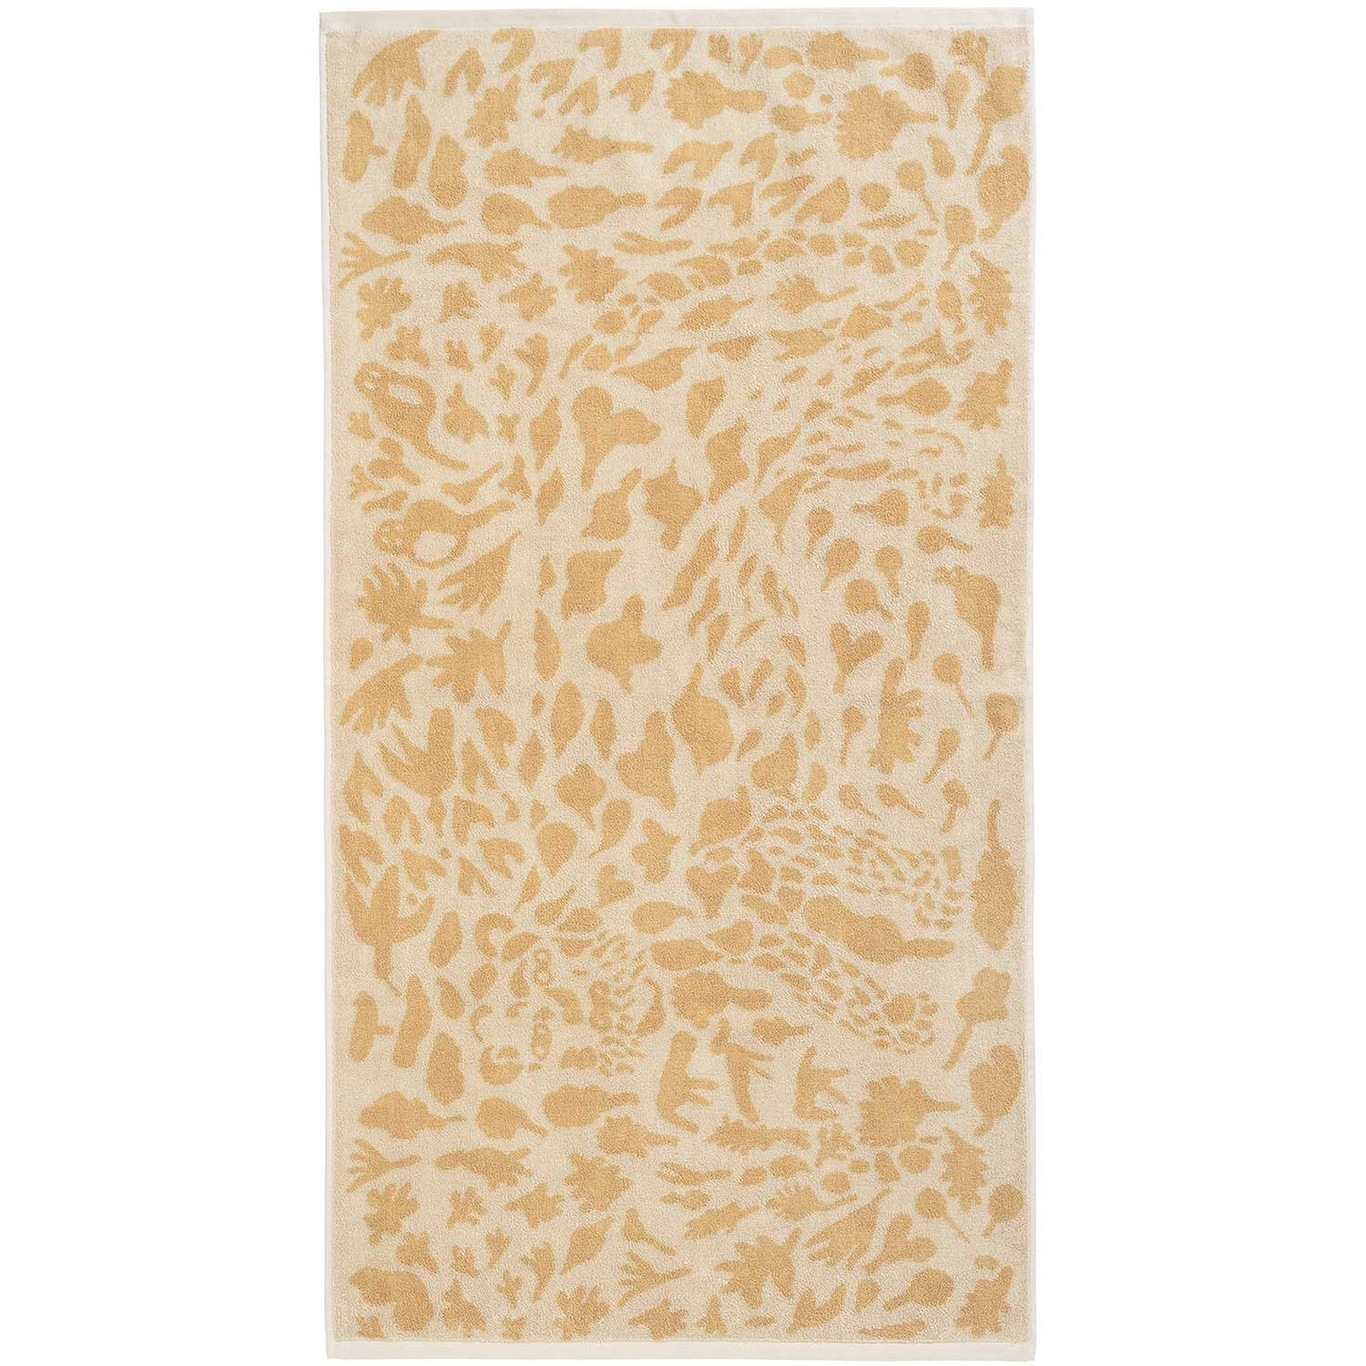 Oiva Toikka Collection Handdoek, 70x140 cm, Cheetah Brown